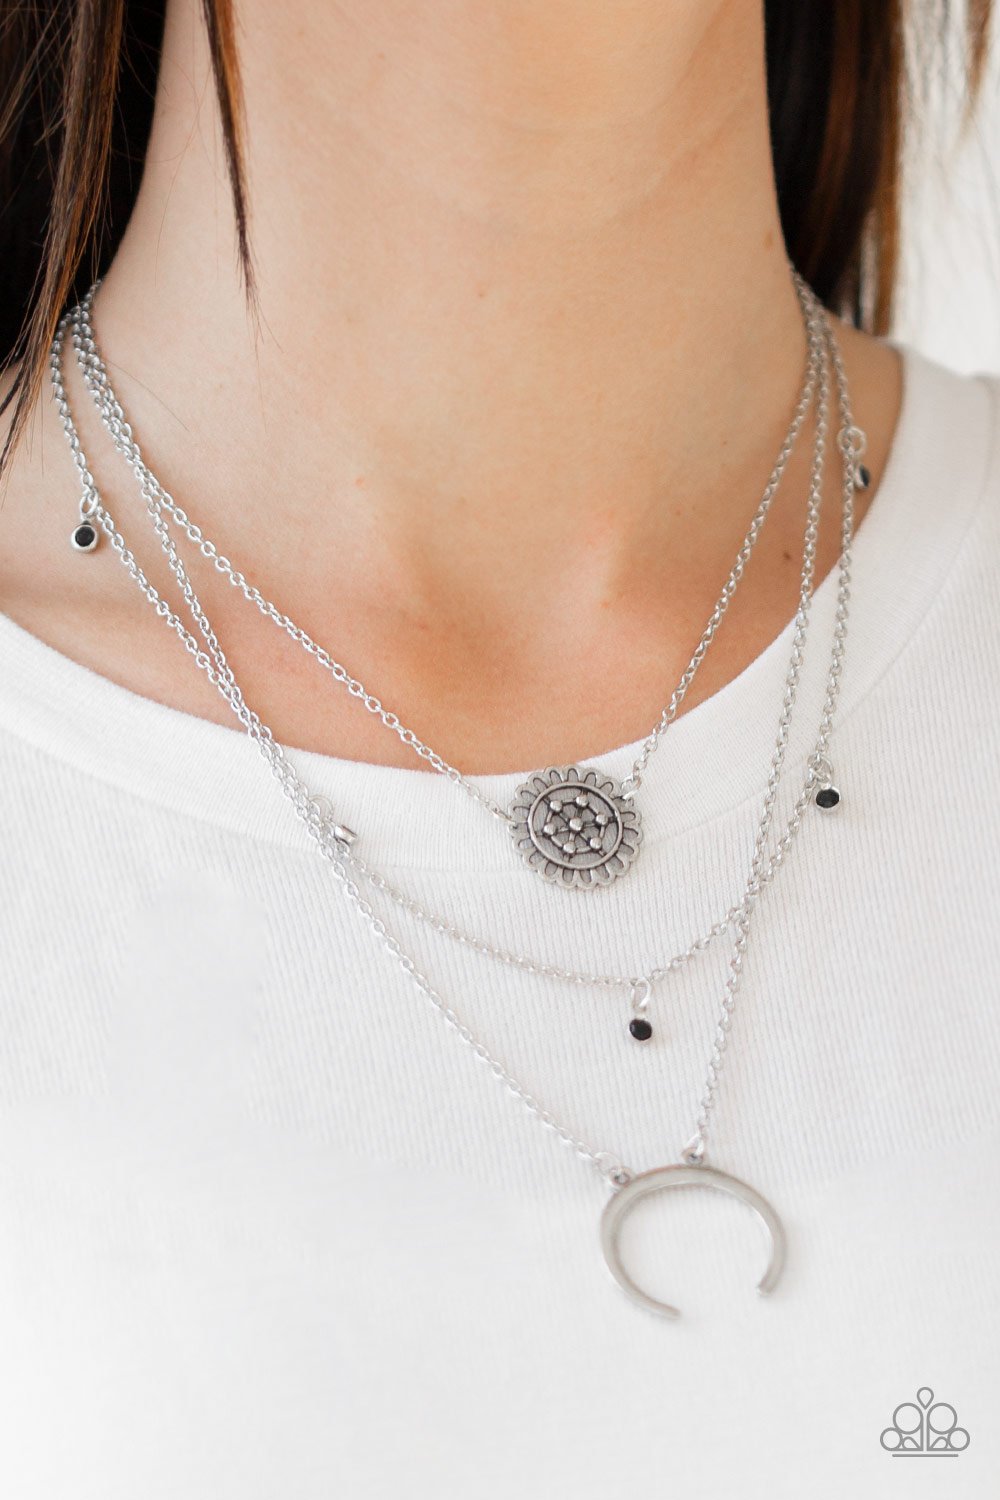 Lunar Lotus-black-Paparazzi necklace